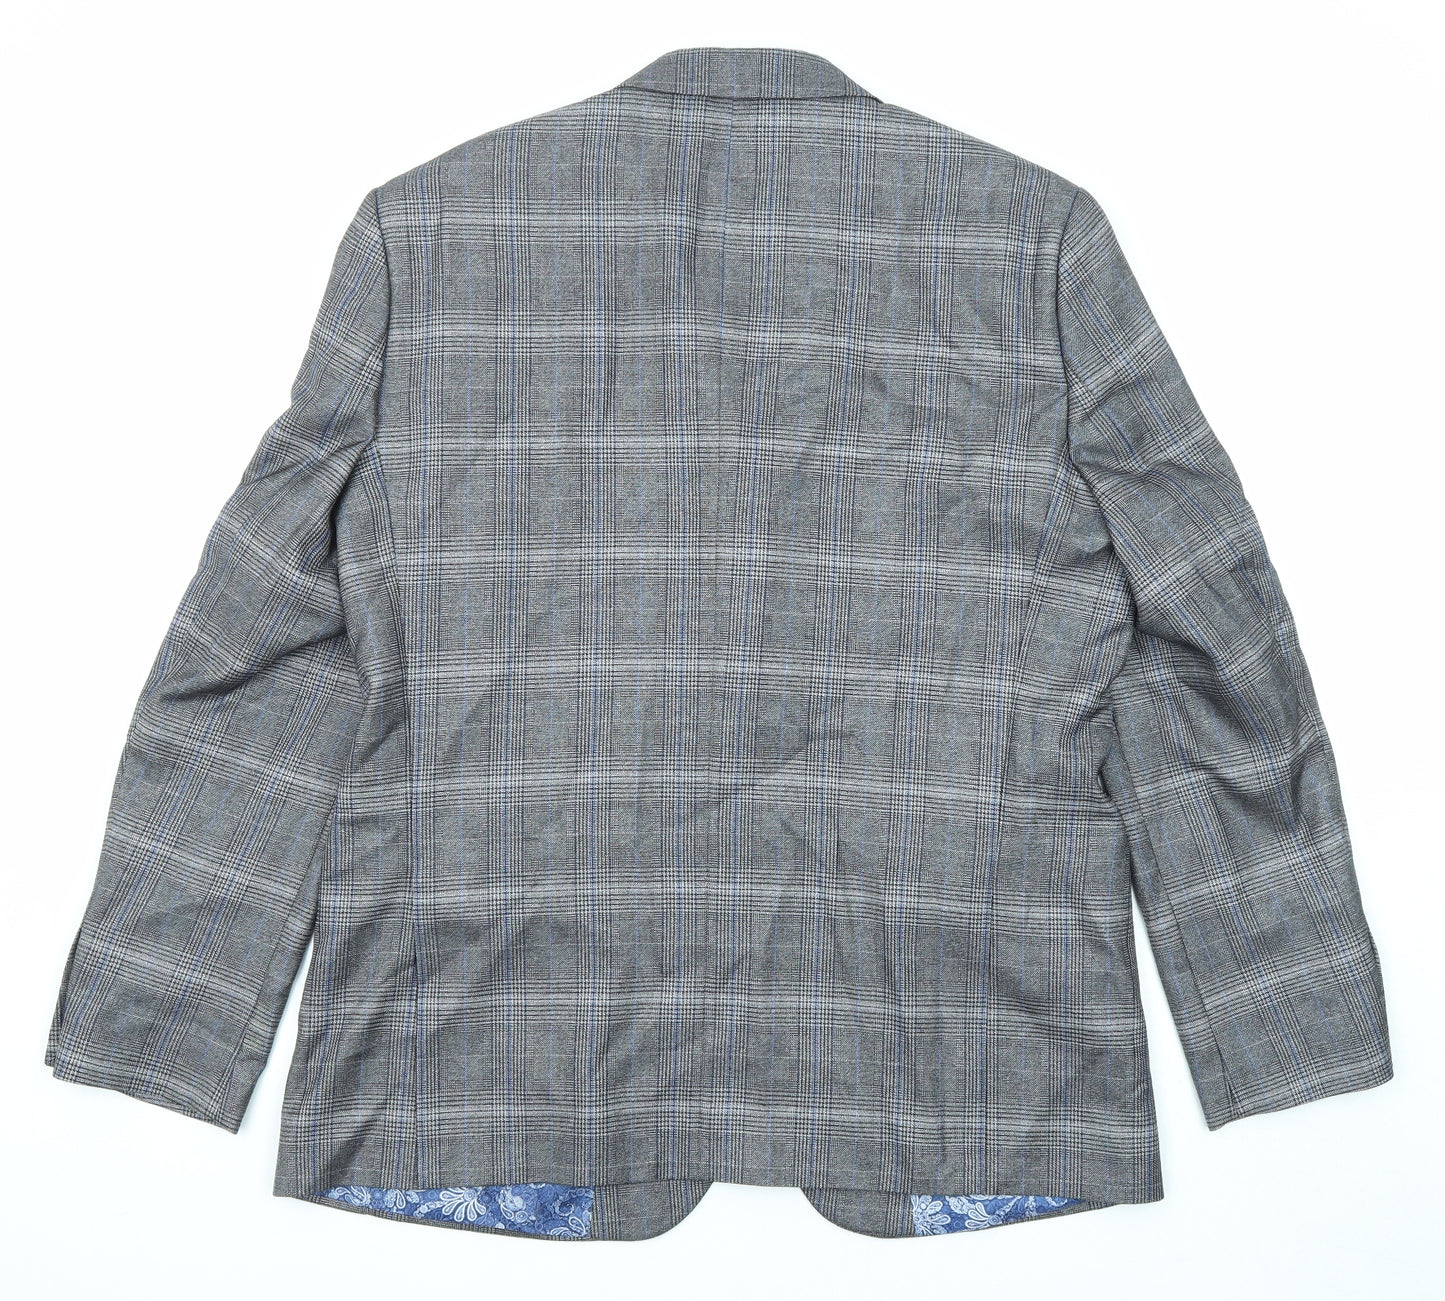 Jacamo Mens Grey Plaid Polyester Jacket Suit Jacket Size 44 Regular